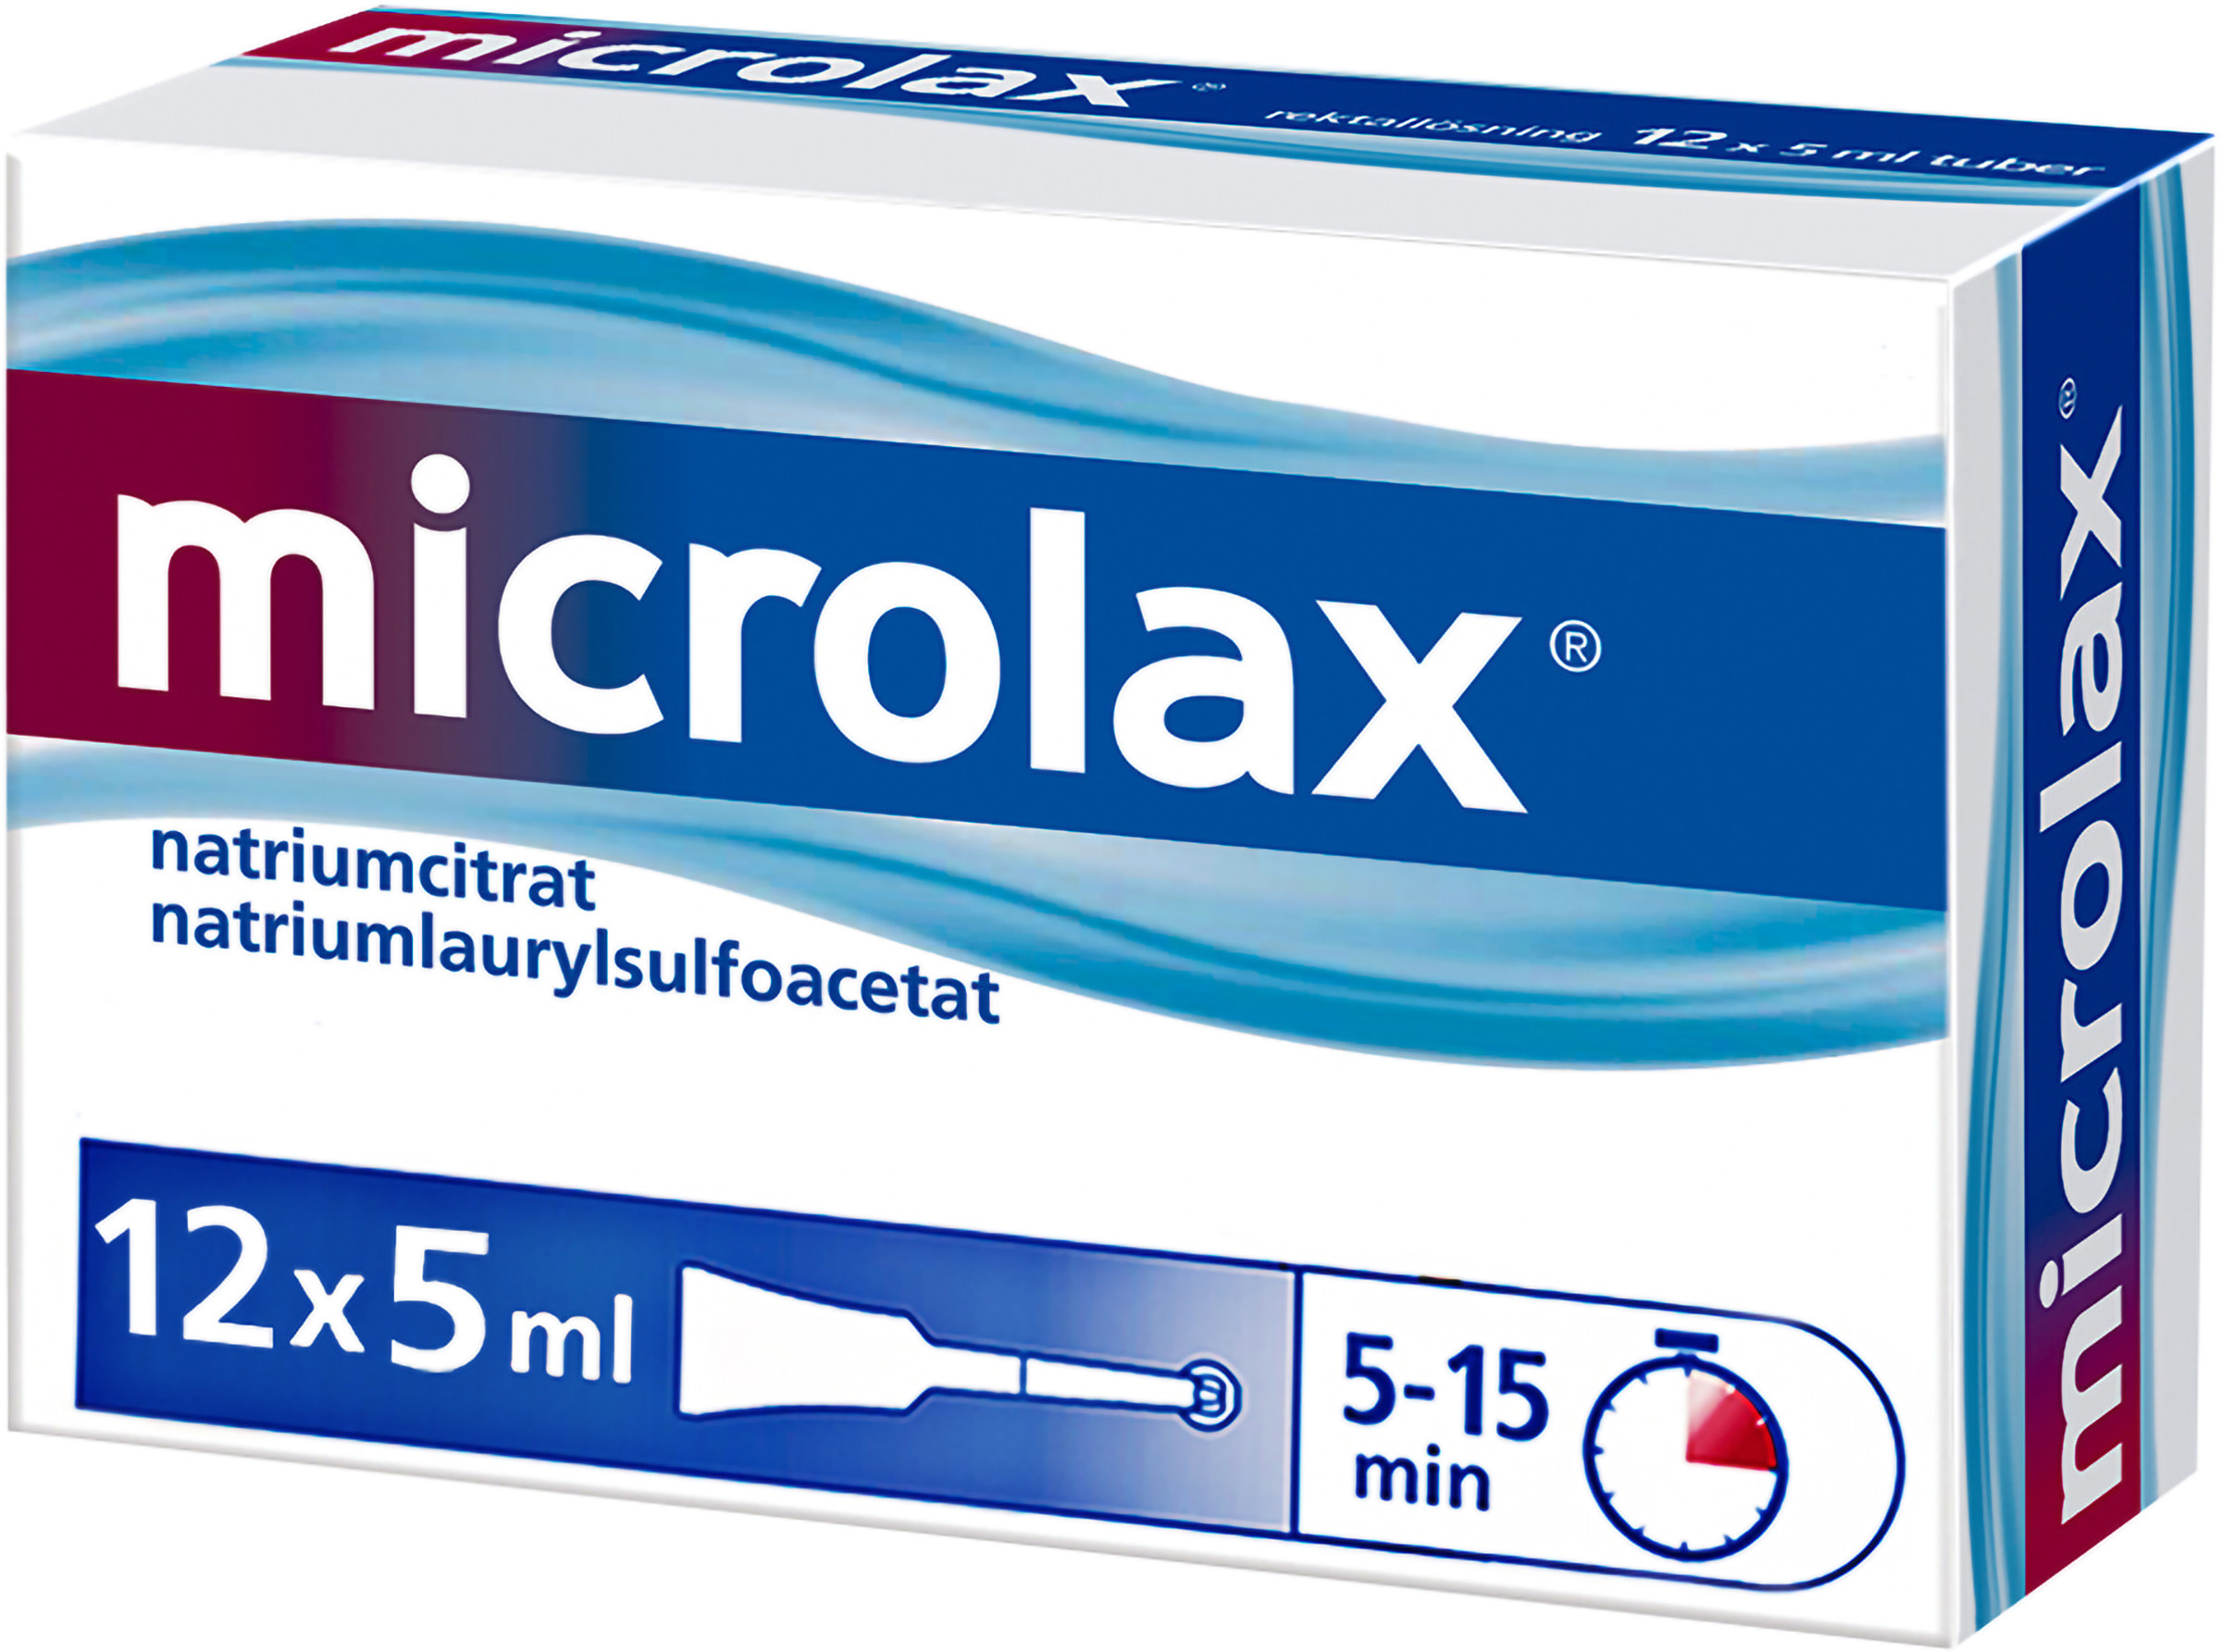 Microlax Mikrolavemang 5 ml 12 st